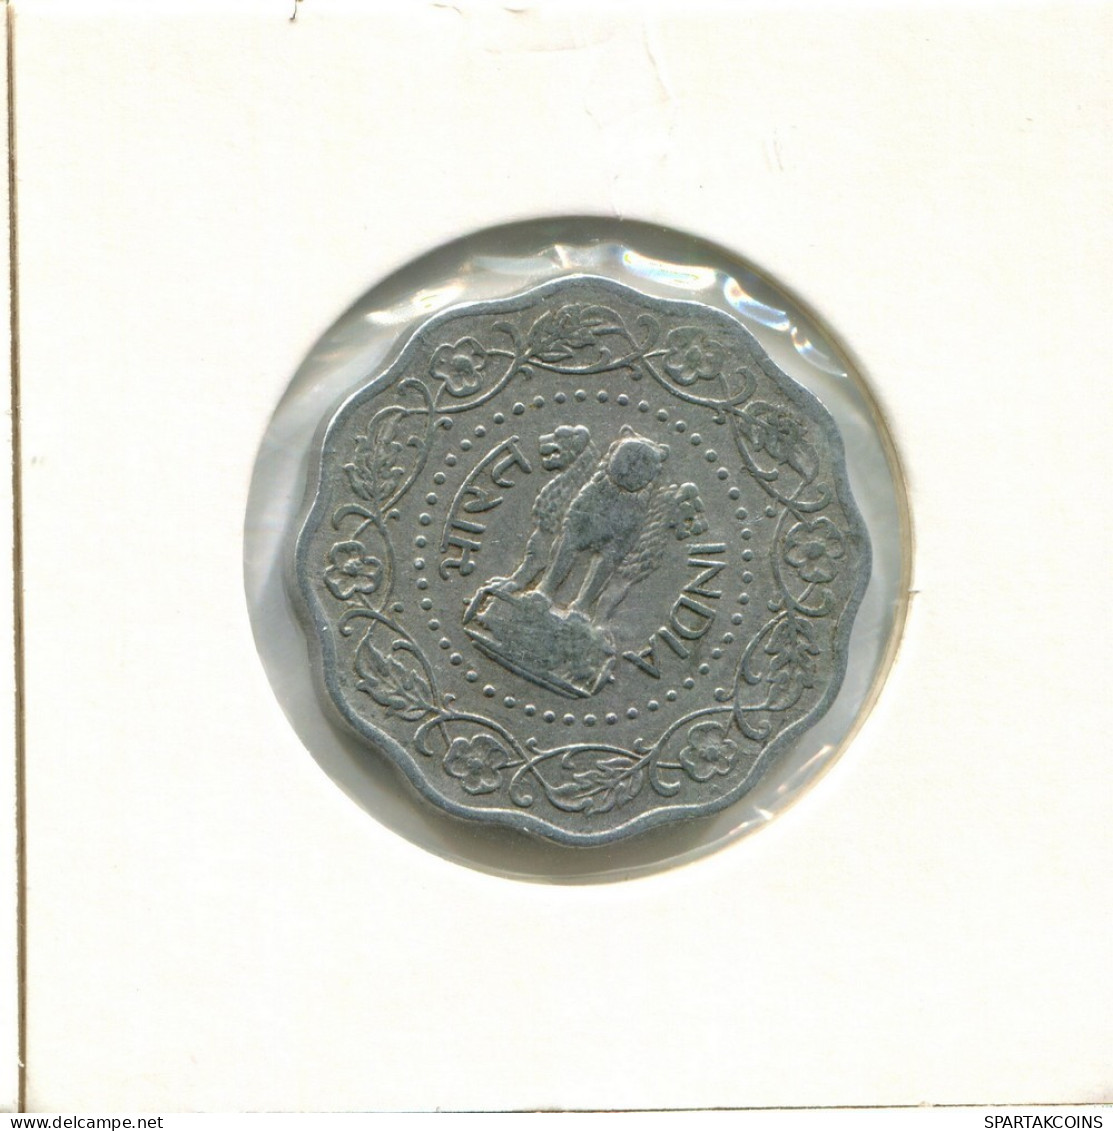 10 PAISE 1974 INDIA Coin #AY749.U.A - Inde